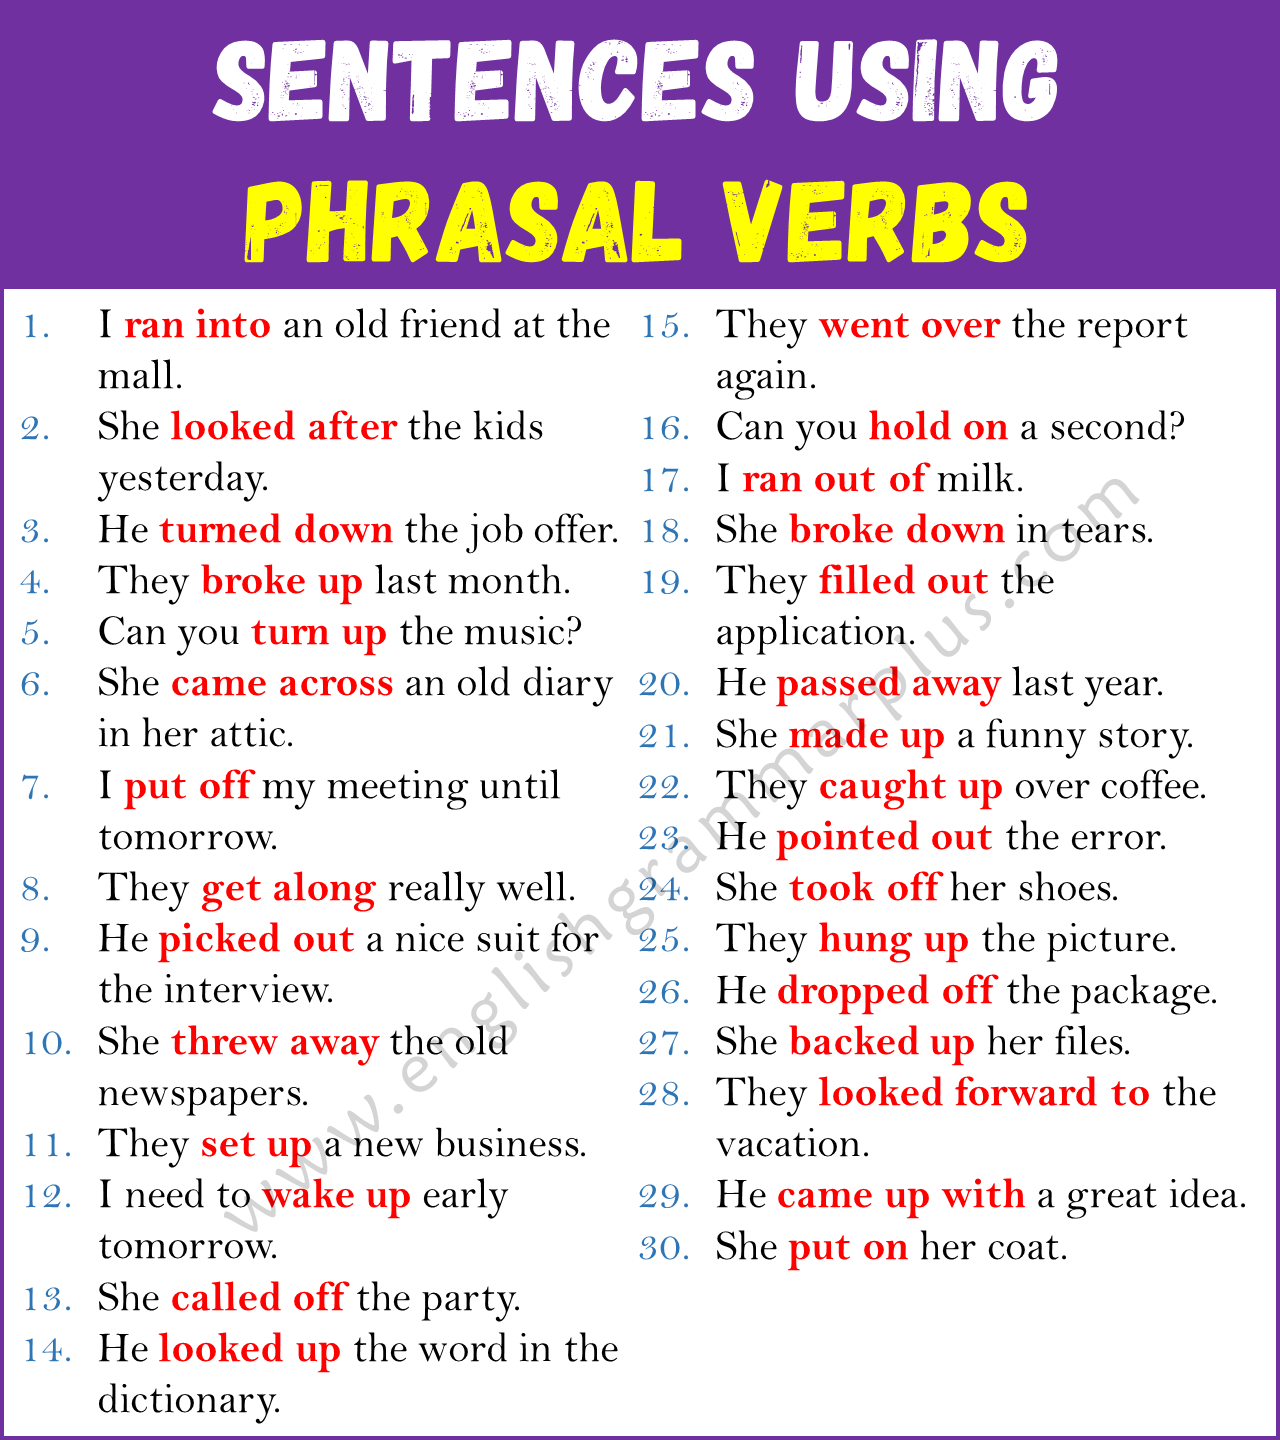 Examples of Phrasal Verbs in Sentences